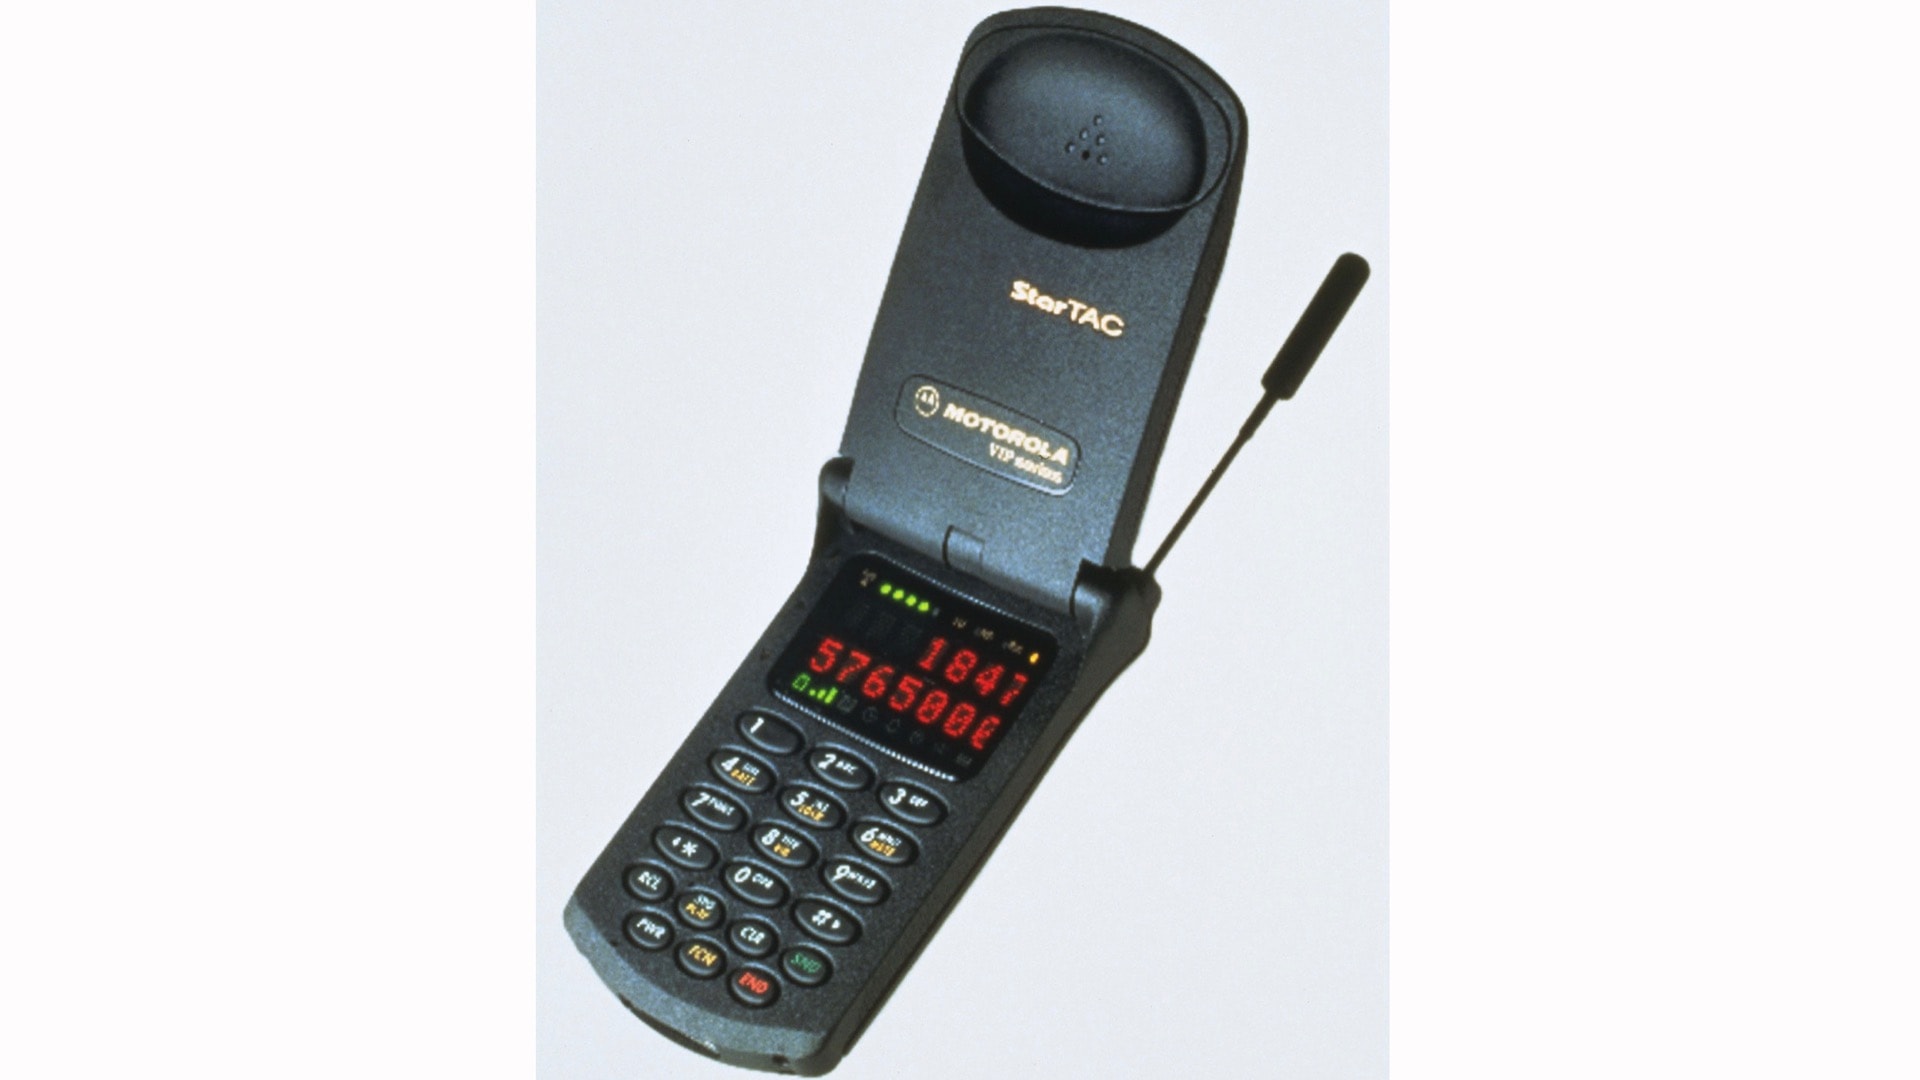 Motorola StarTAC clamshell phone